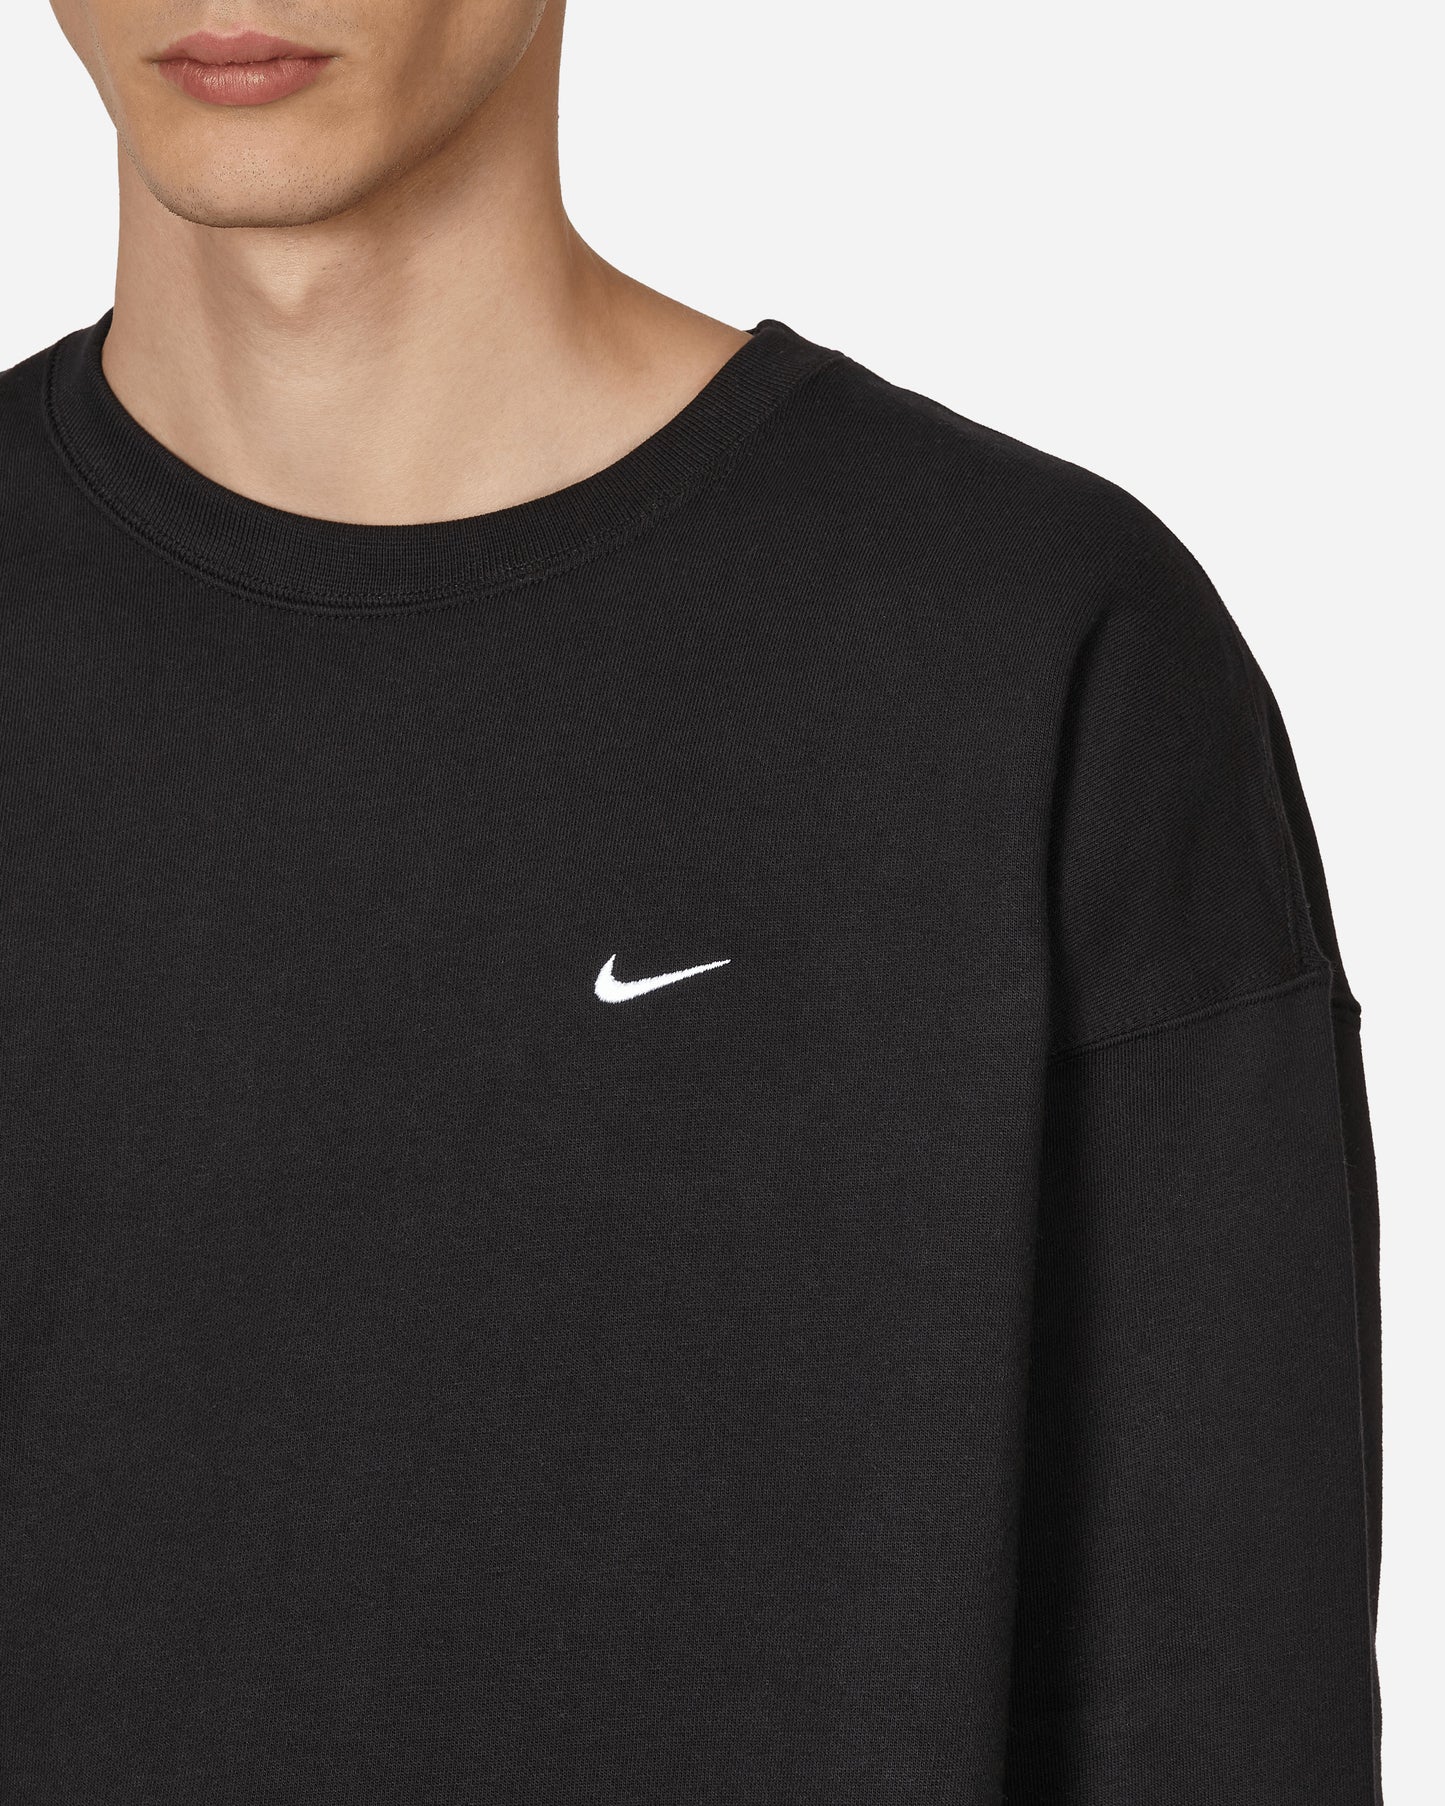 Nike Nikelab Black/White Sweatshirts Crewneck CV0554-010